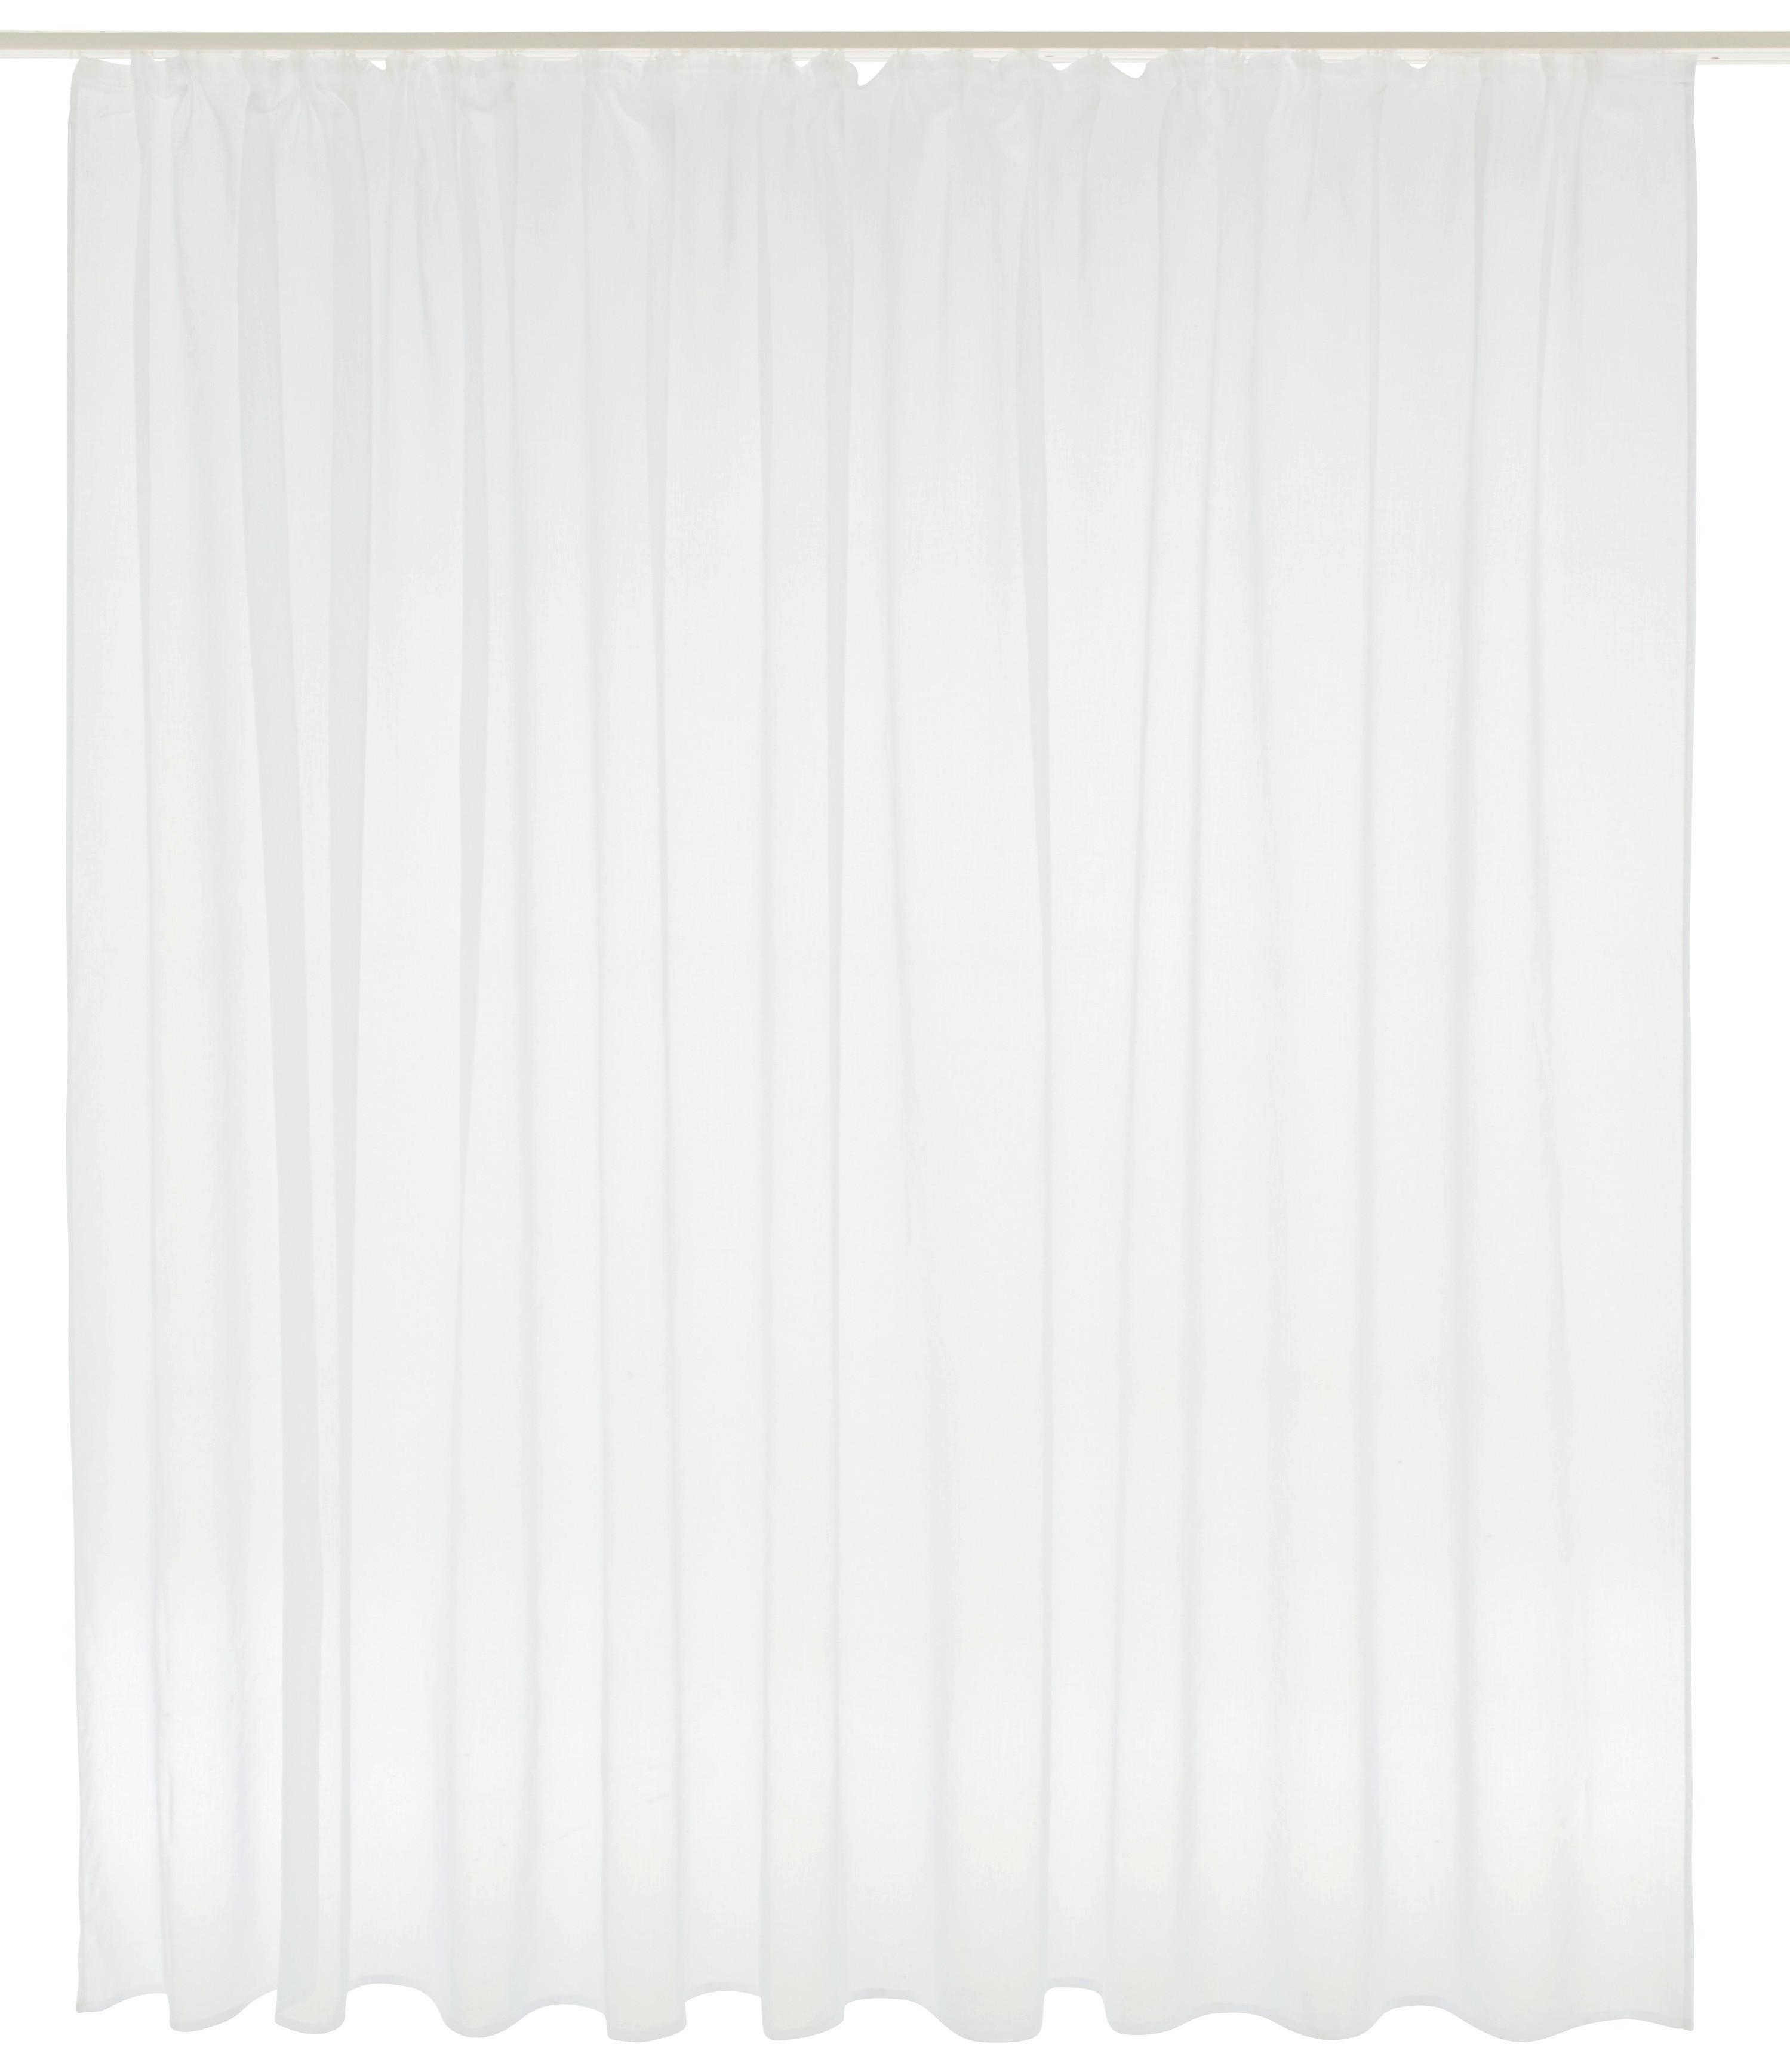 Kusová Záclona Tosca Store, 300/175cm - biela, textil (300/175cm) - Modern Living